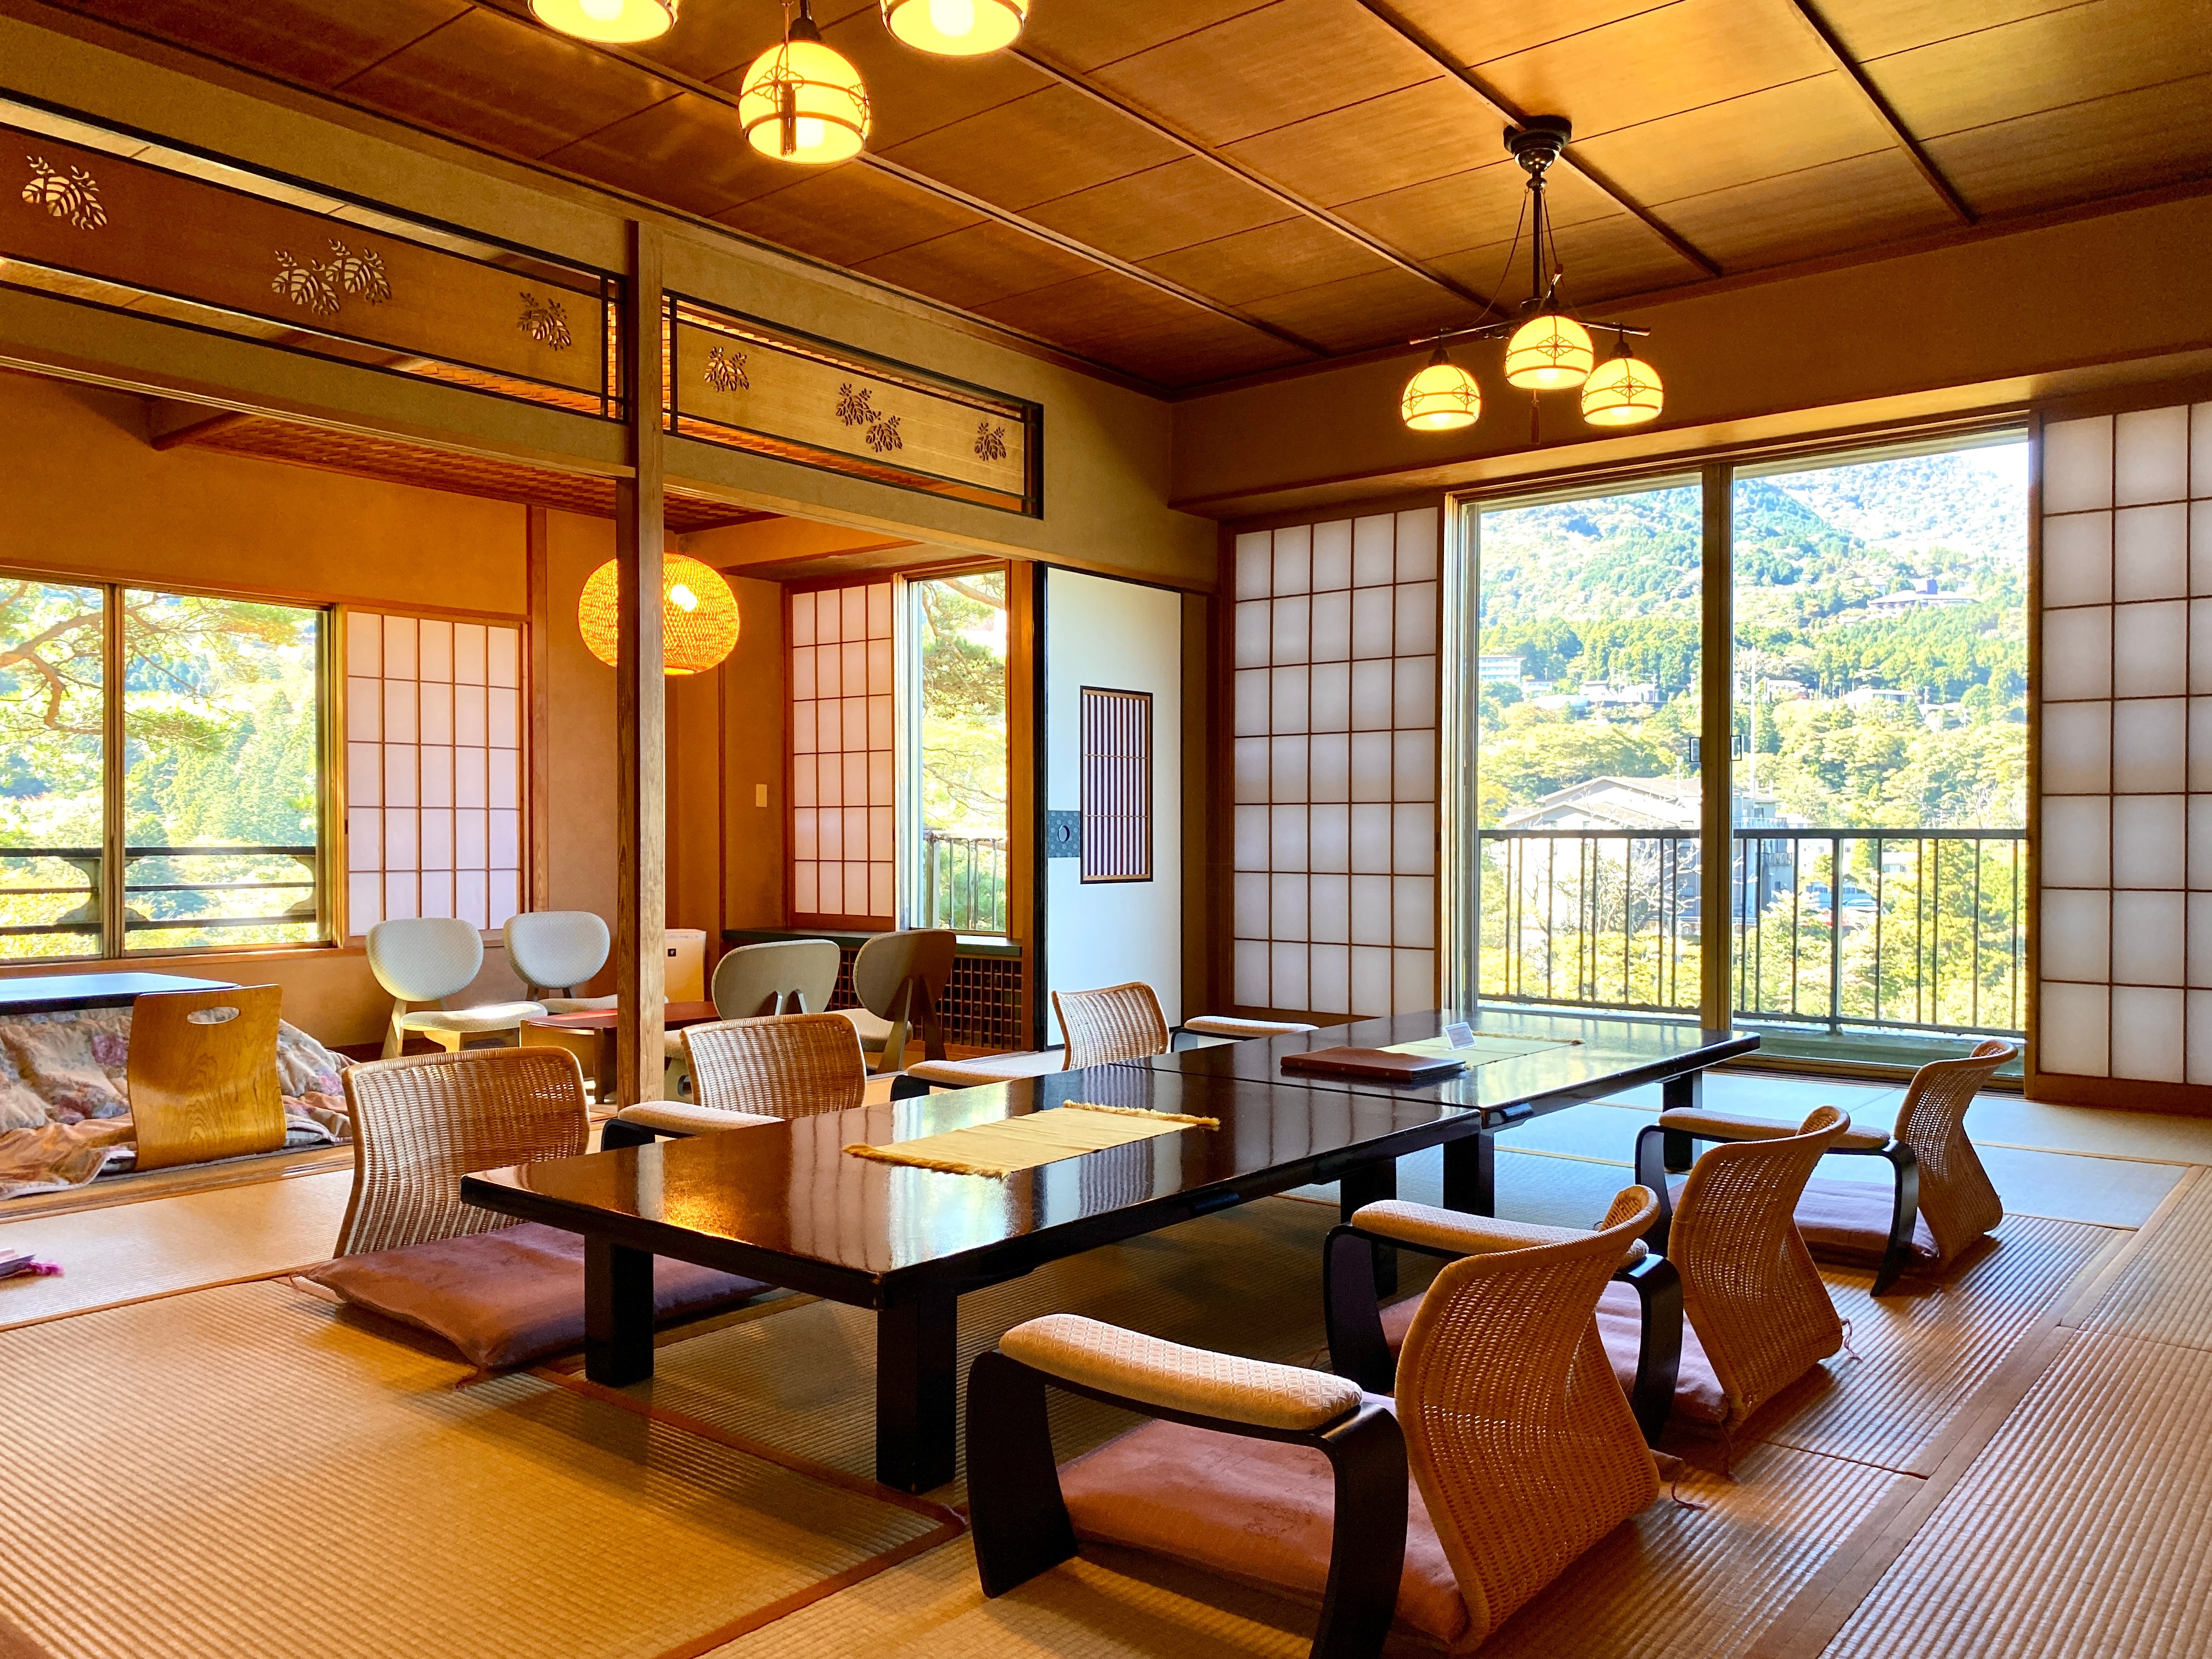 VIP room (17.5 tatami mats + next room + western style room + Japanese cypress bath)